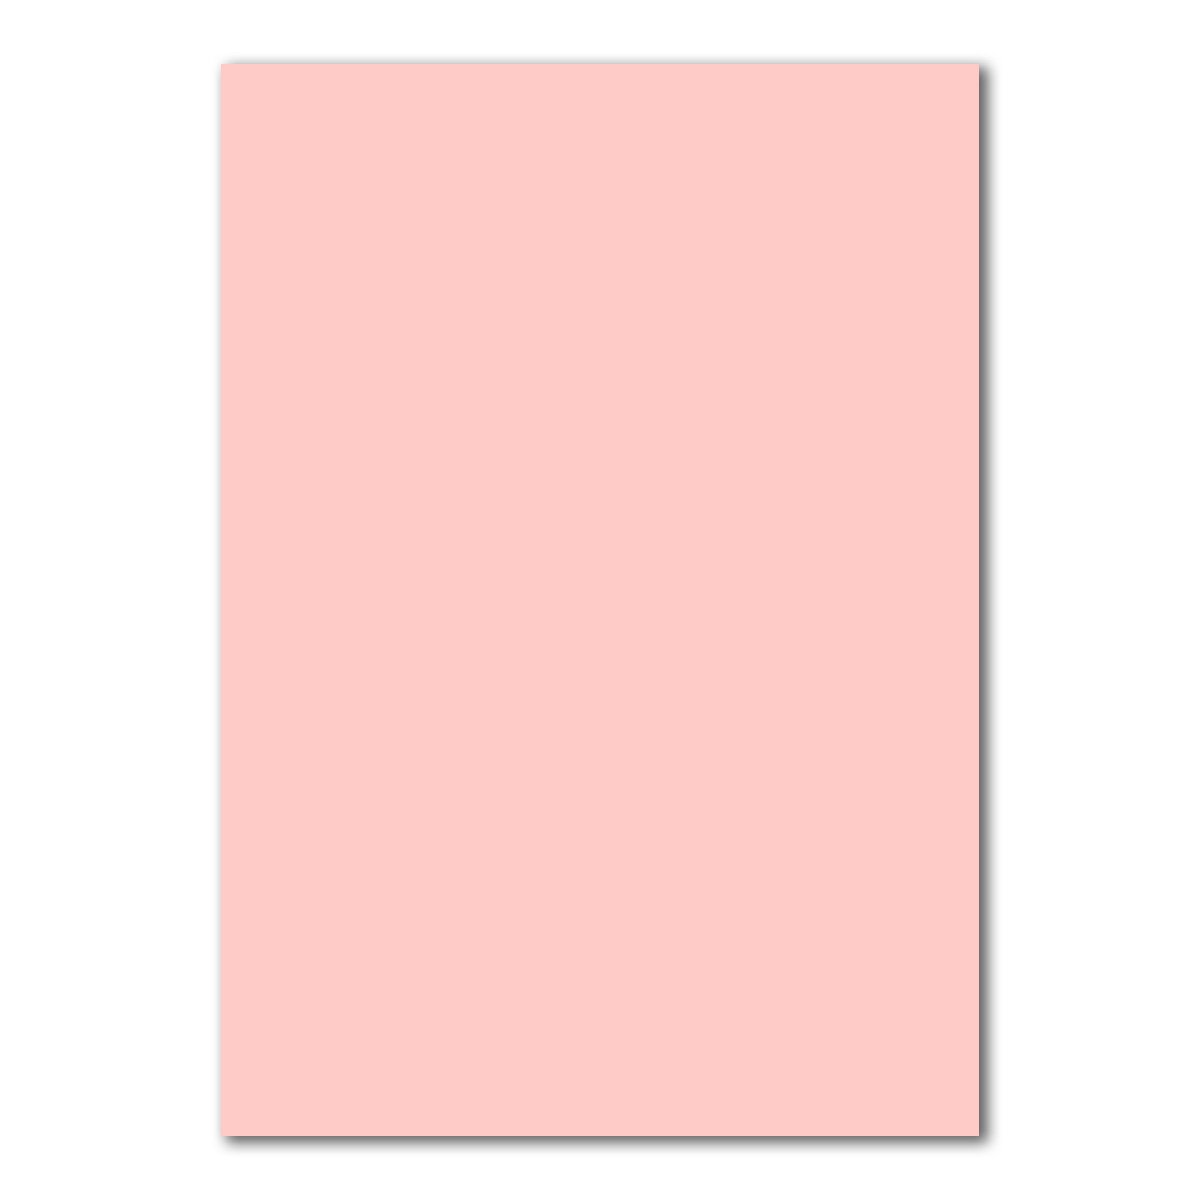 100 DIN A4 Papier-bögen Planobogen - Rosa - 240 g/m² - 21 x 29,7 cm - Bastelbogen Ton-Papier Fotokarton Bastel-Papier Ton-Karton - FarbenFroh